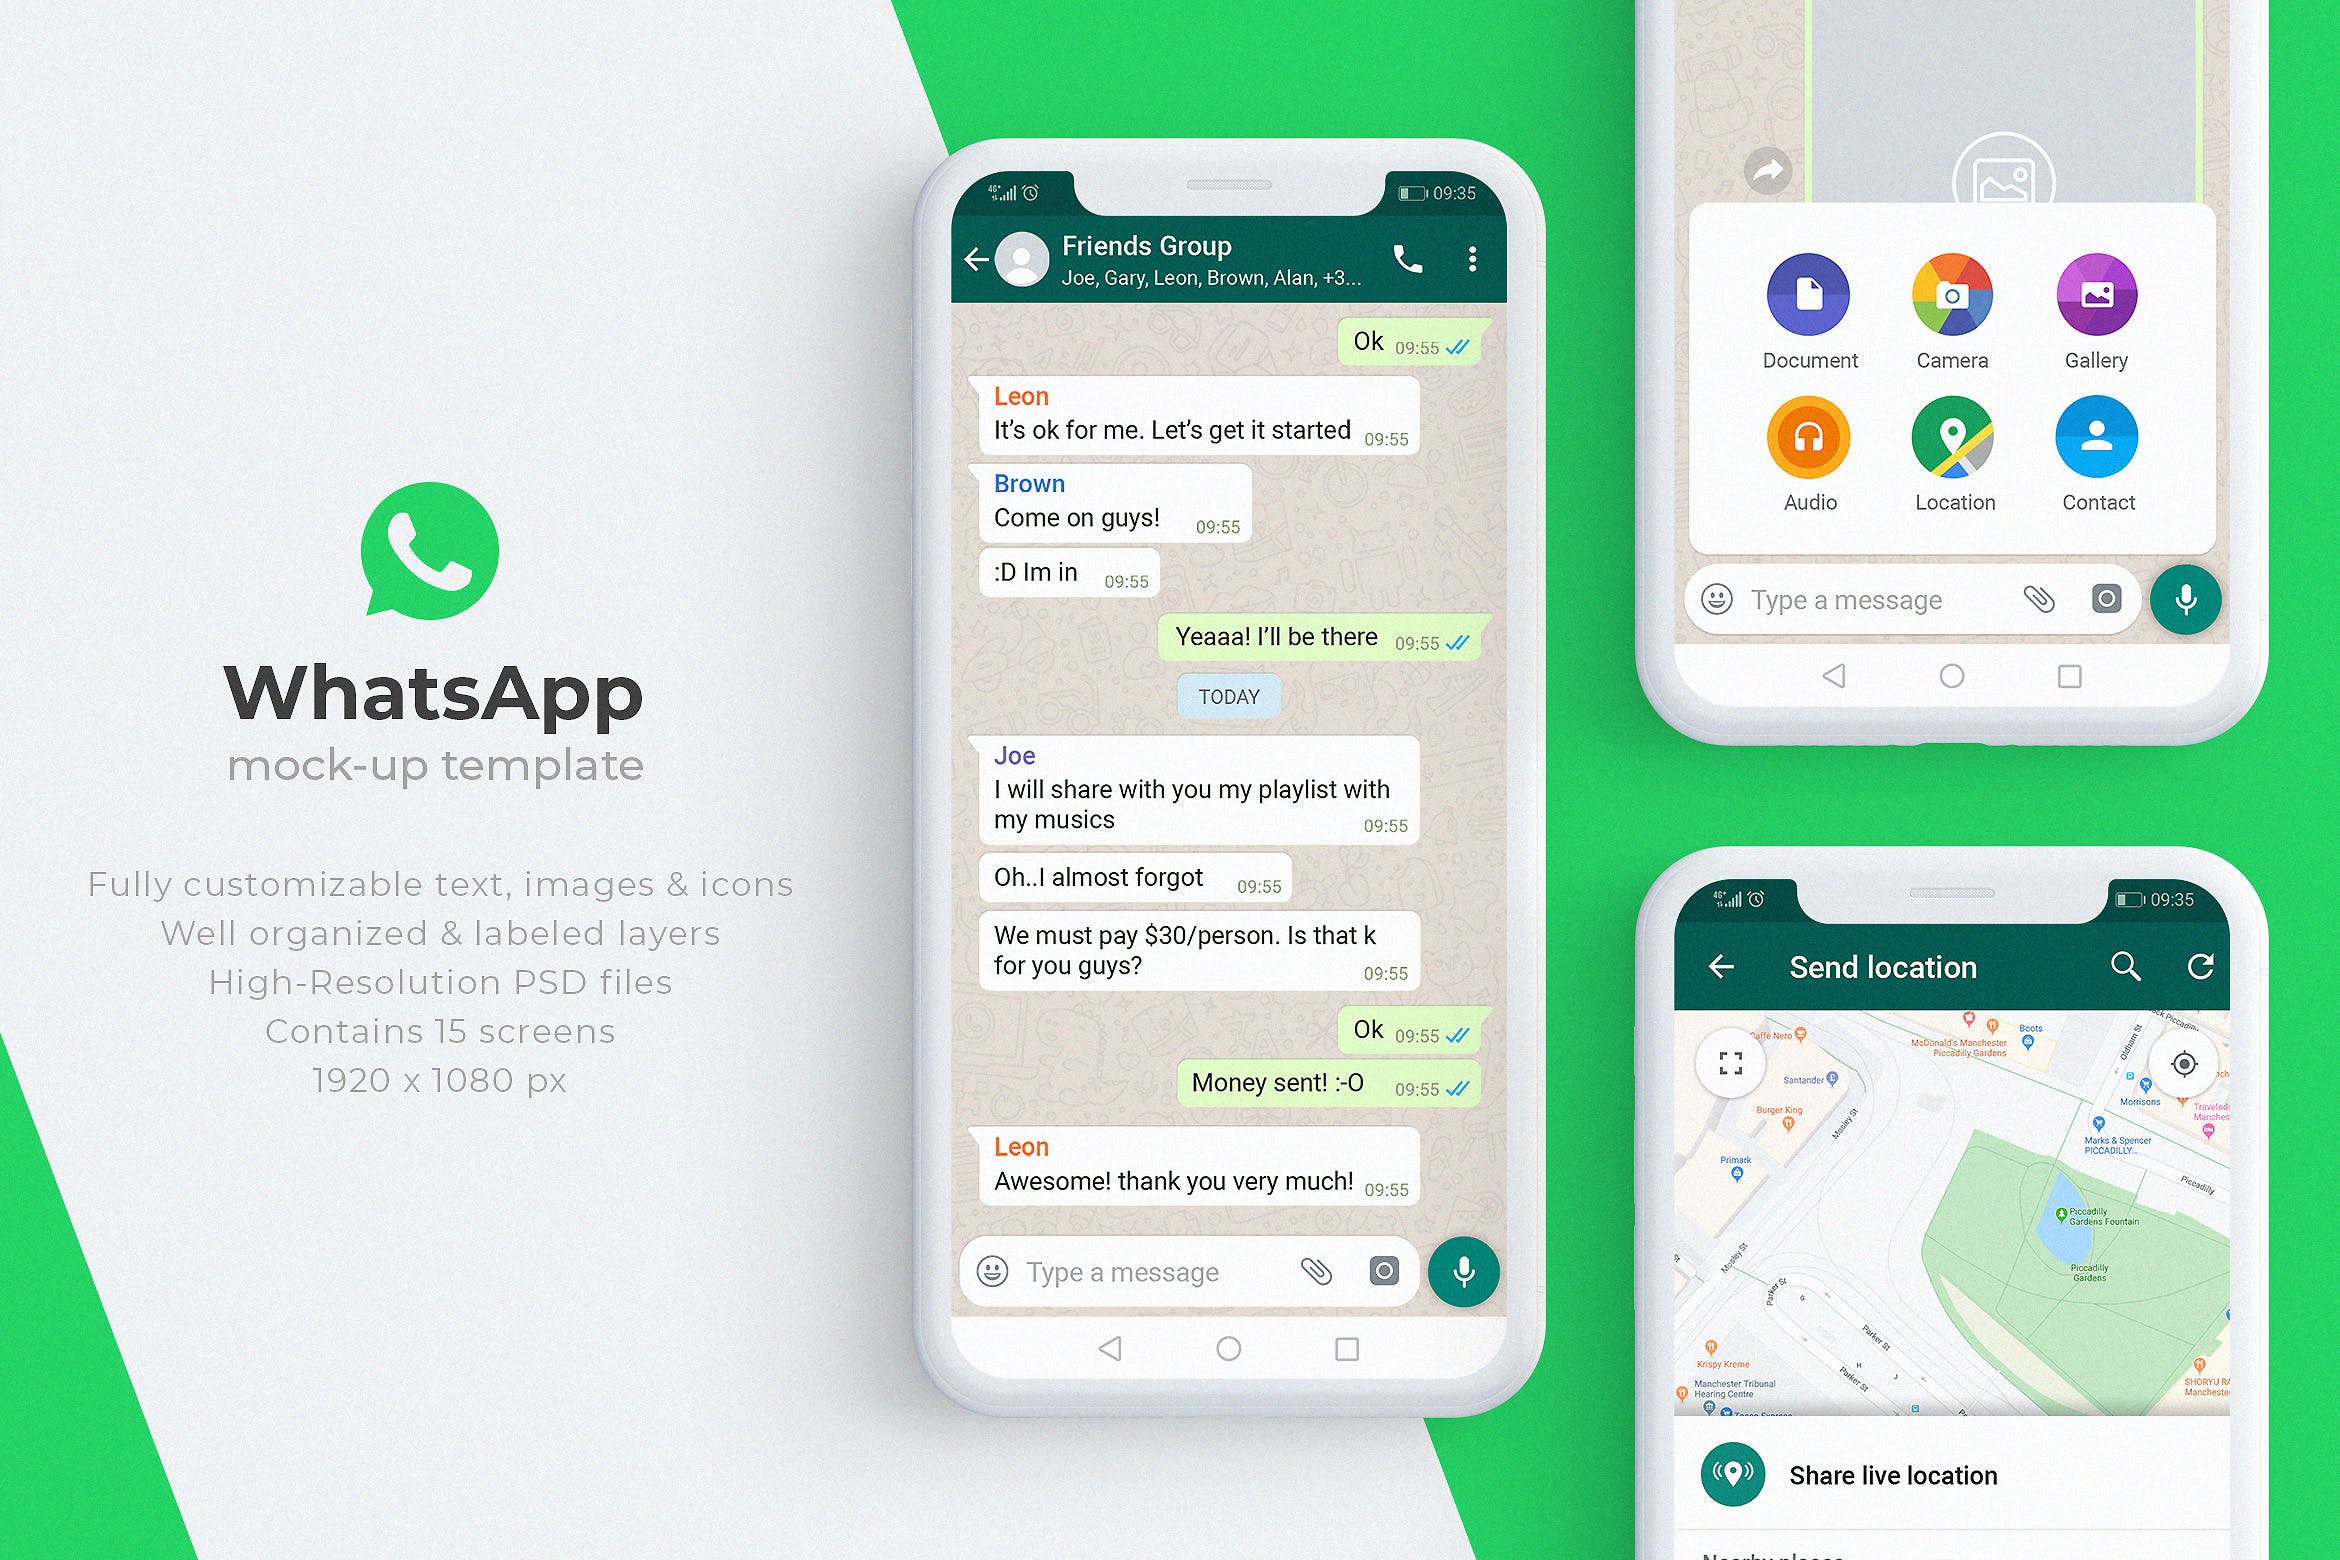 WhatsApp应用界面设计展示普贤居精选样机模板 WhatsApp Mock-Up Template插图